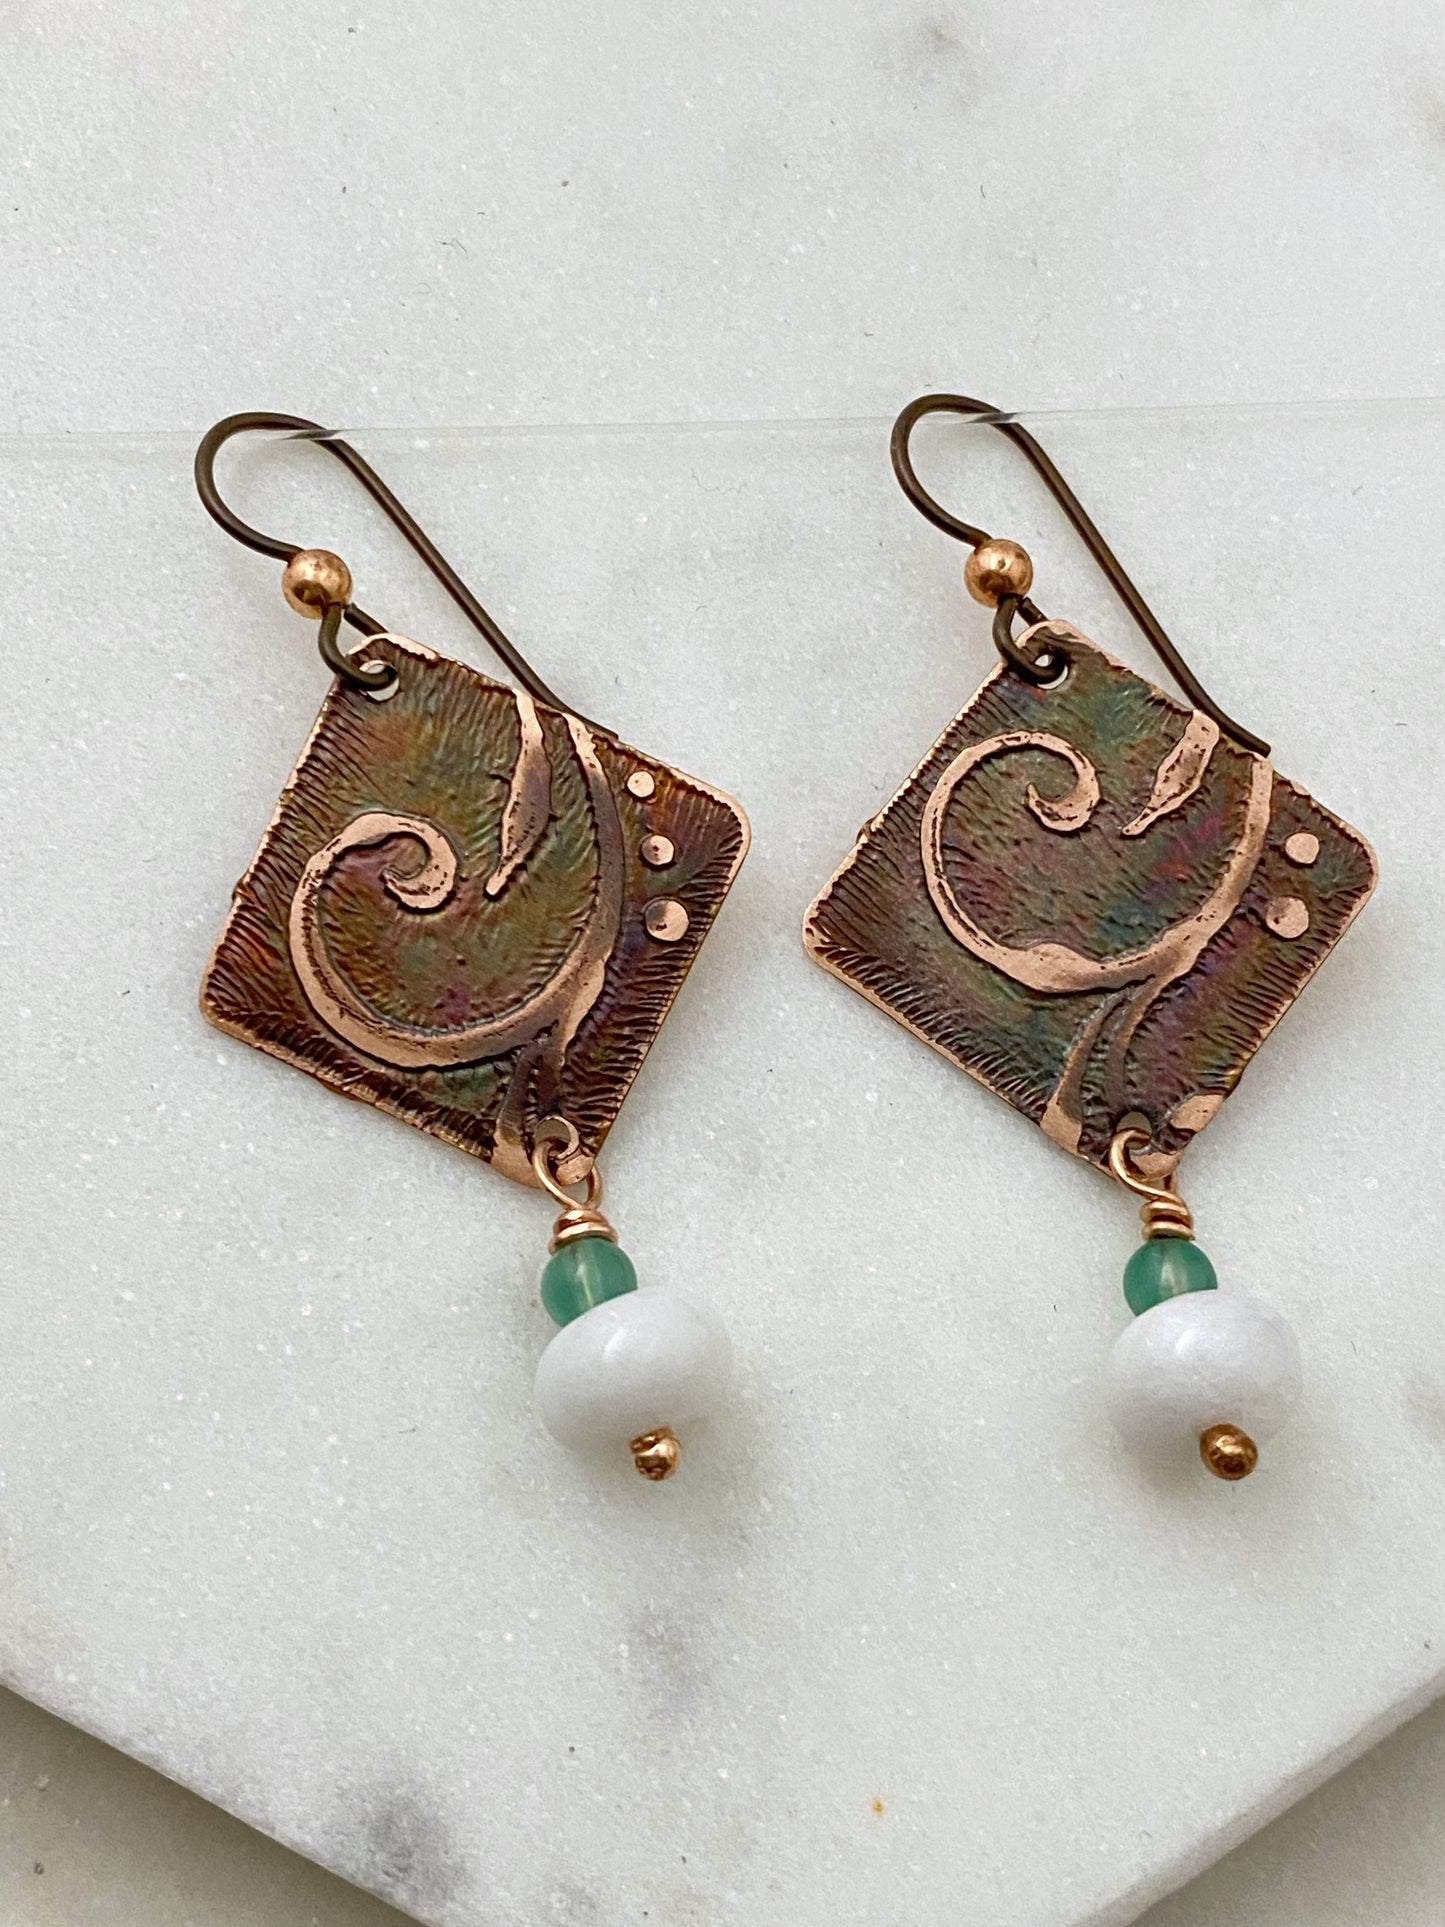 Acid  etched copper earrings with aventurine and snow quartz gemstones